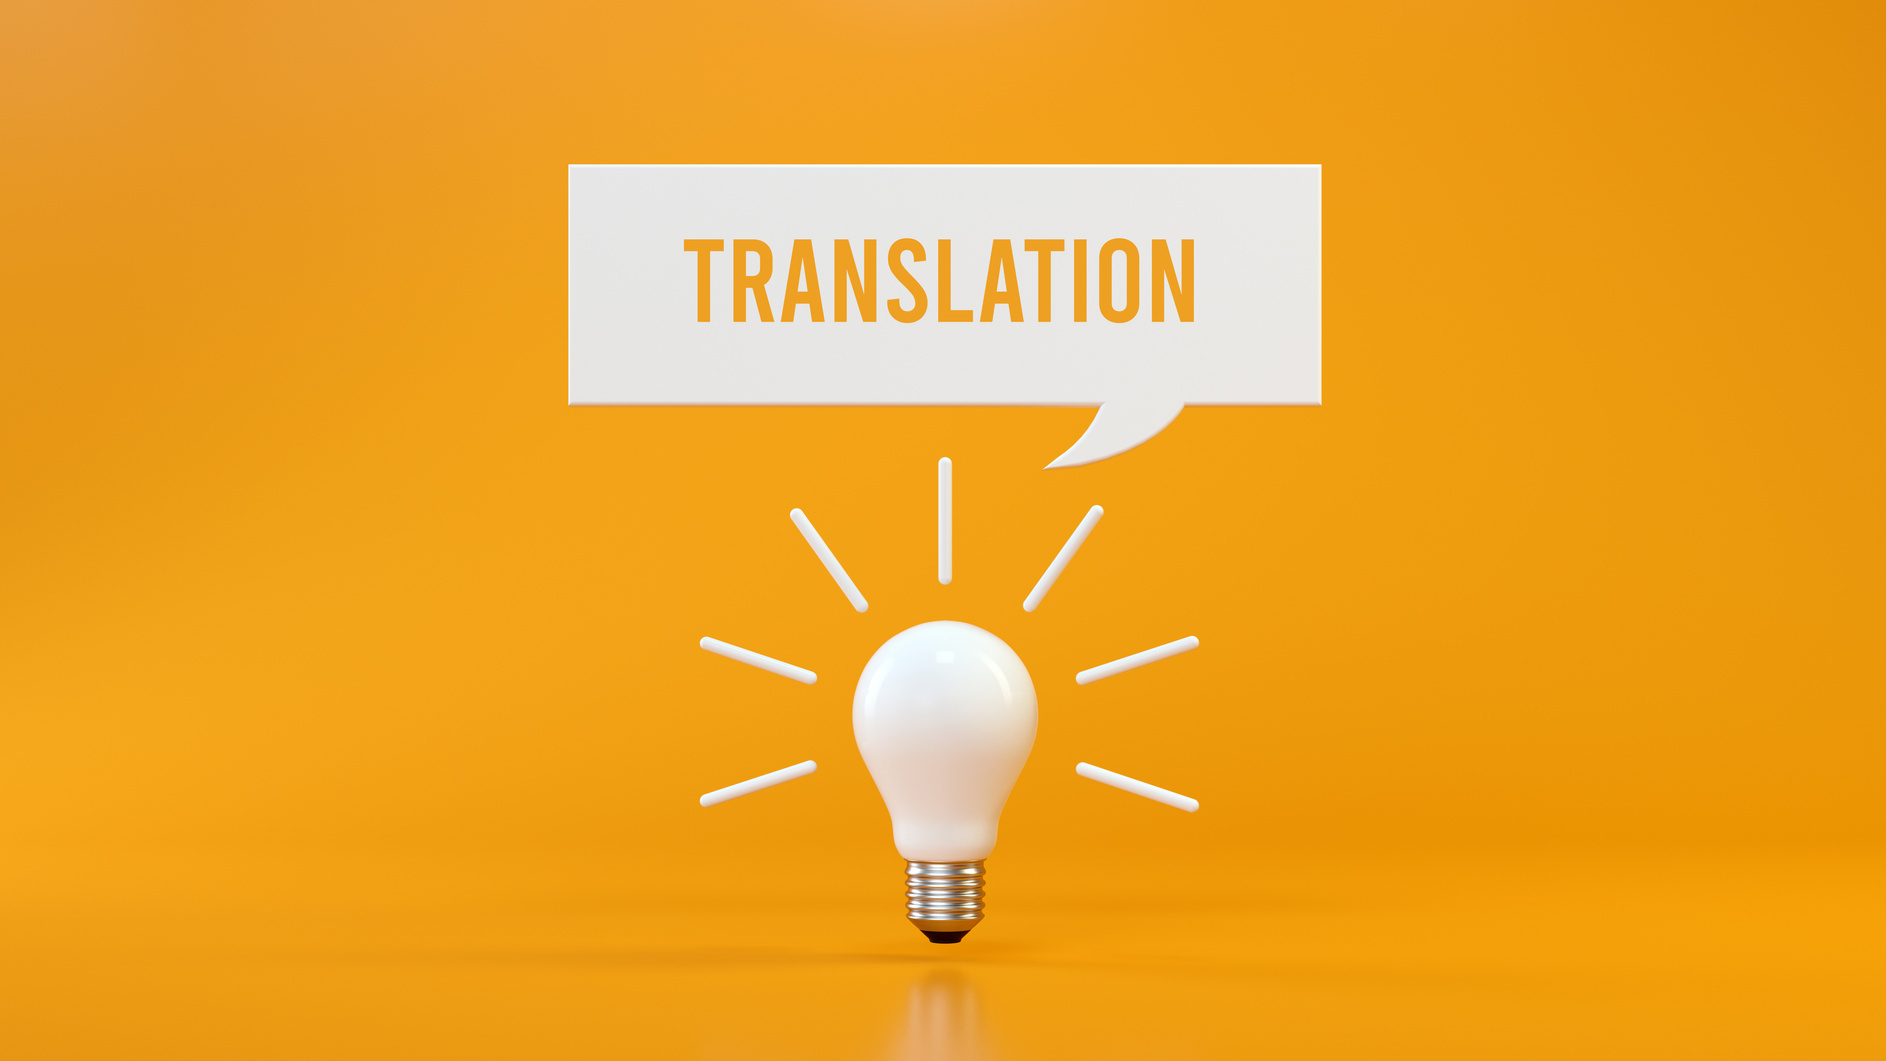 TRANSLATION - LIGHT BULB CONCEPT